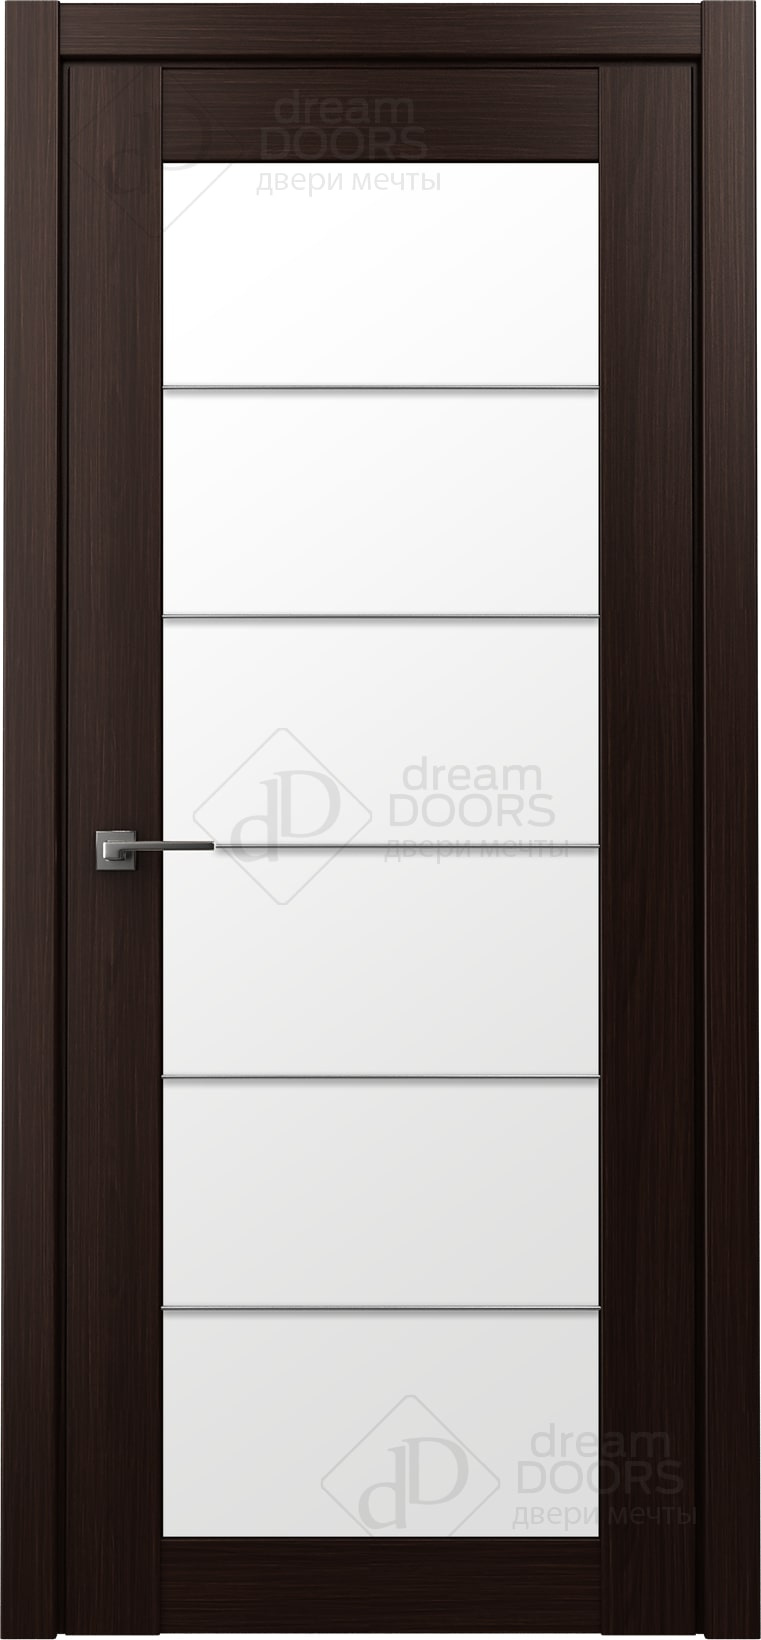 Dream Doors Межкомнатная дверь Престиж с молдингом ПО, арт. 16437 - фото №5